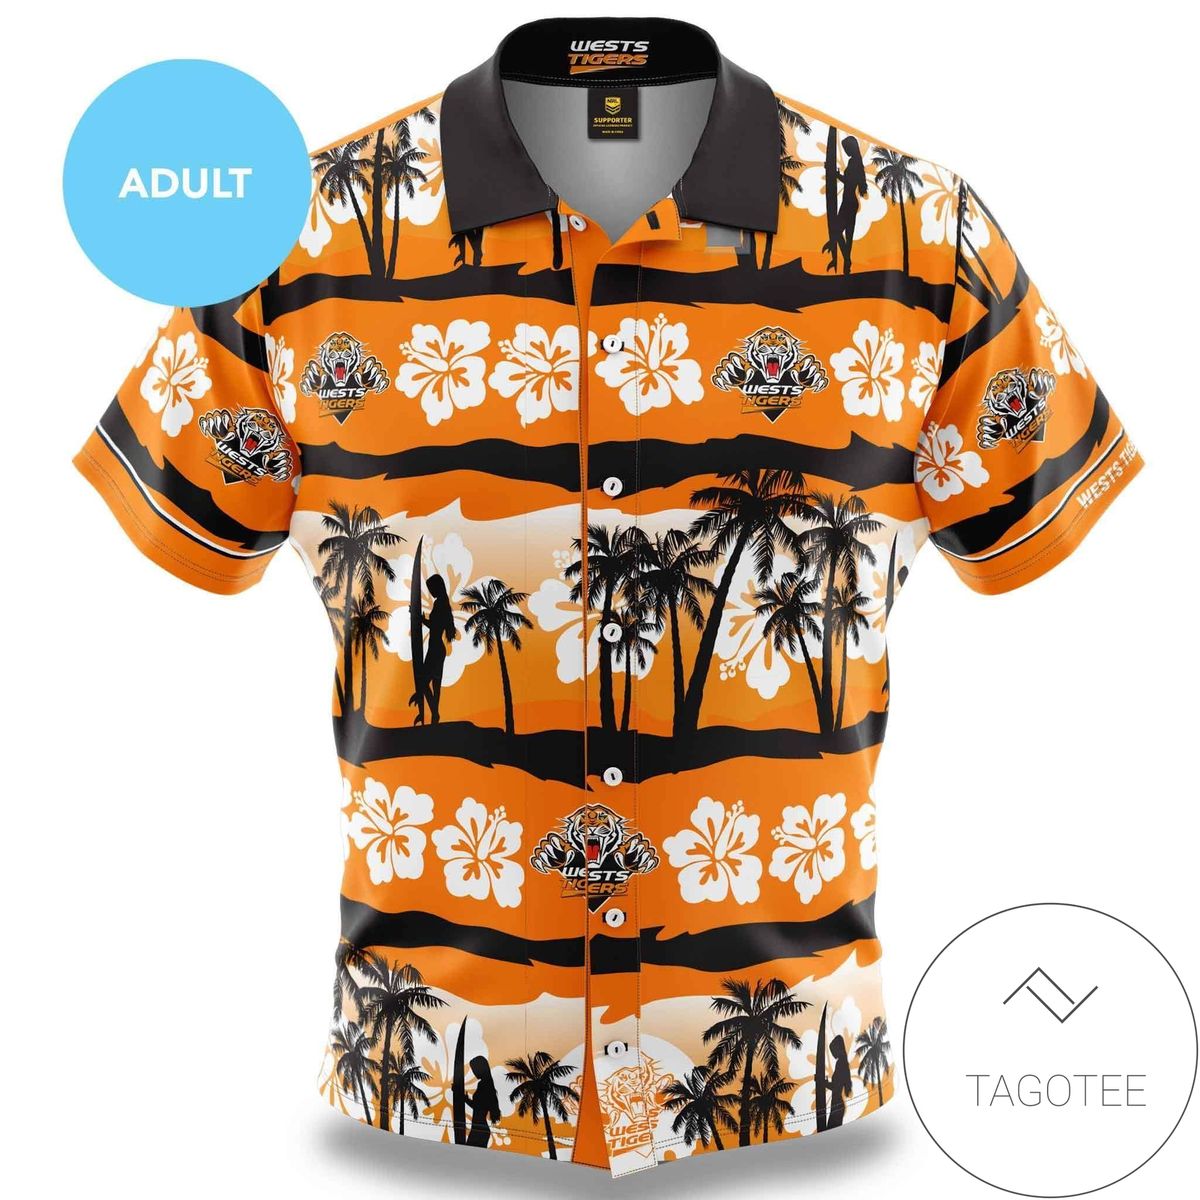 Wests Tigers Adult Hawaiian T Shirt Nrl Professional Australian Football League Football Team